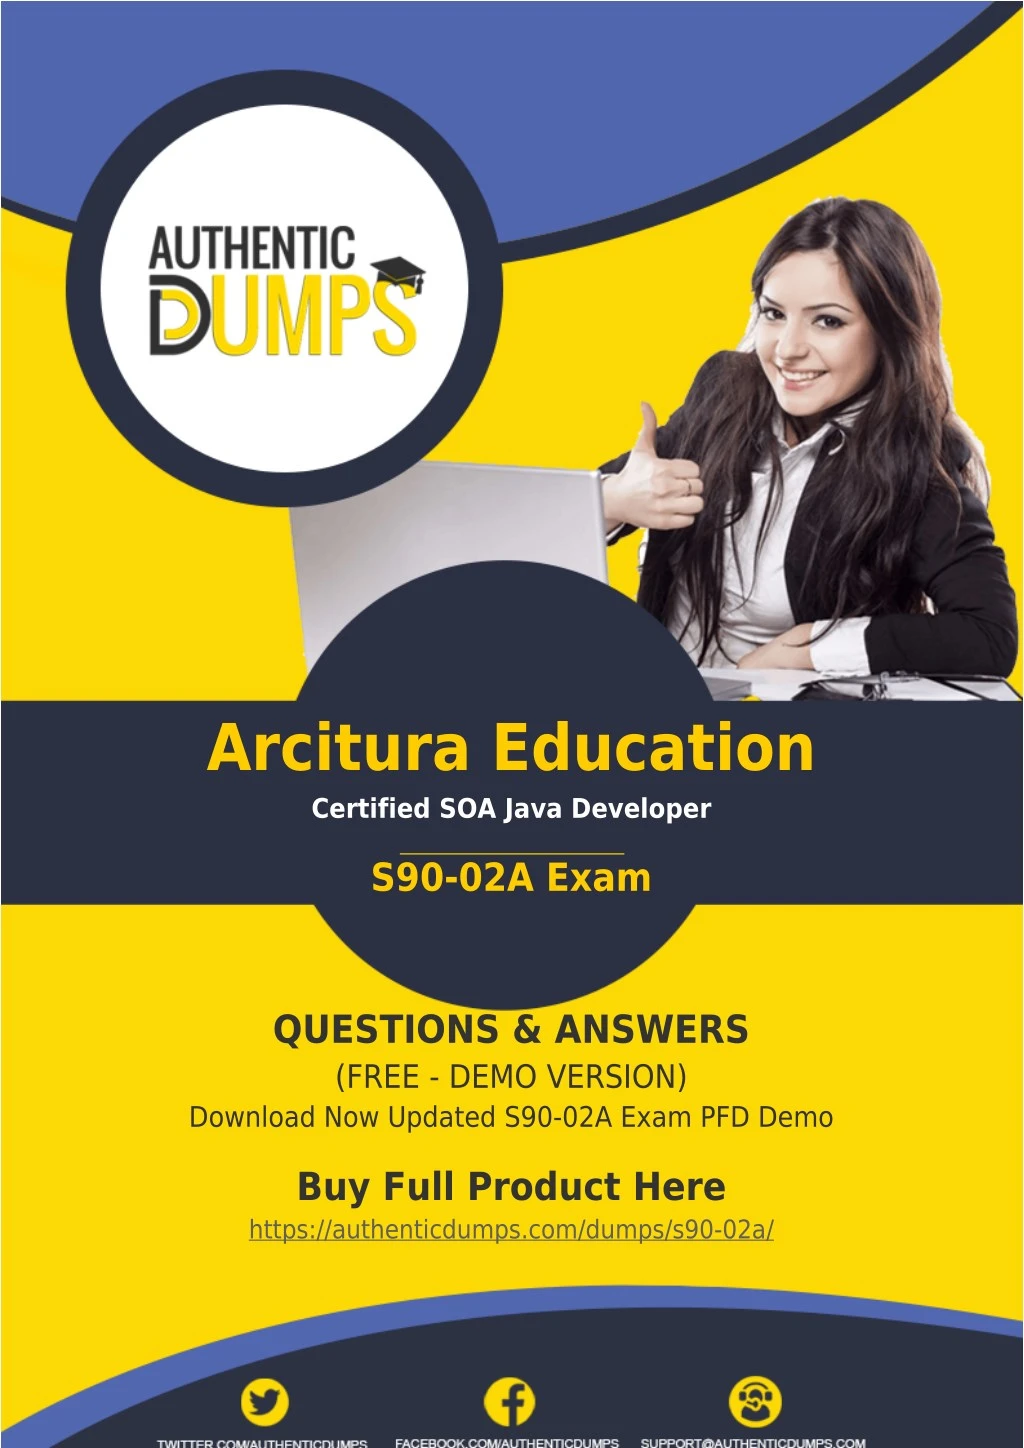 arcitura education certified soa java developer